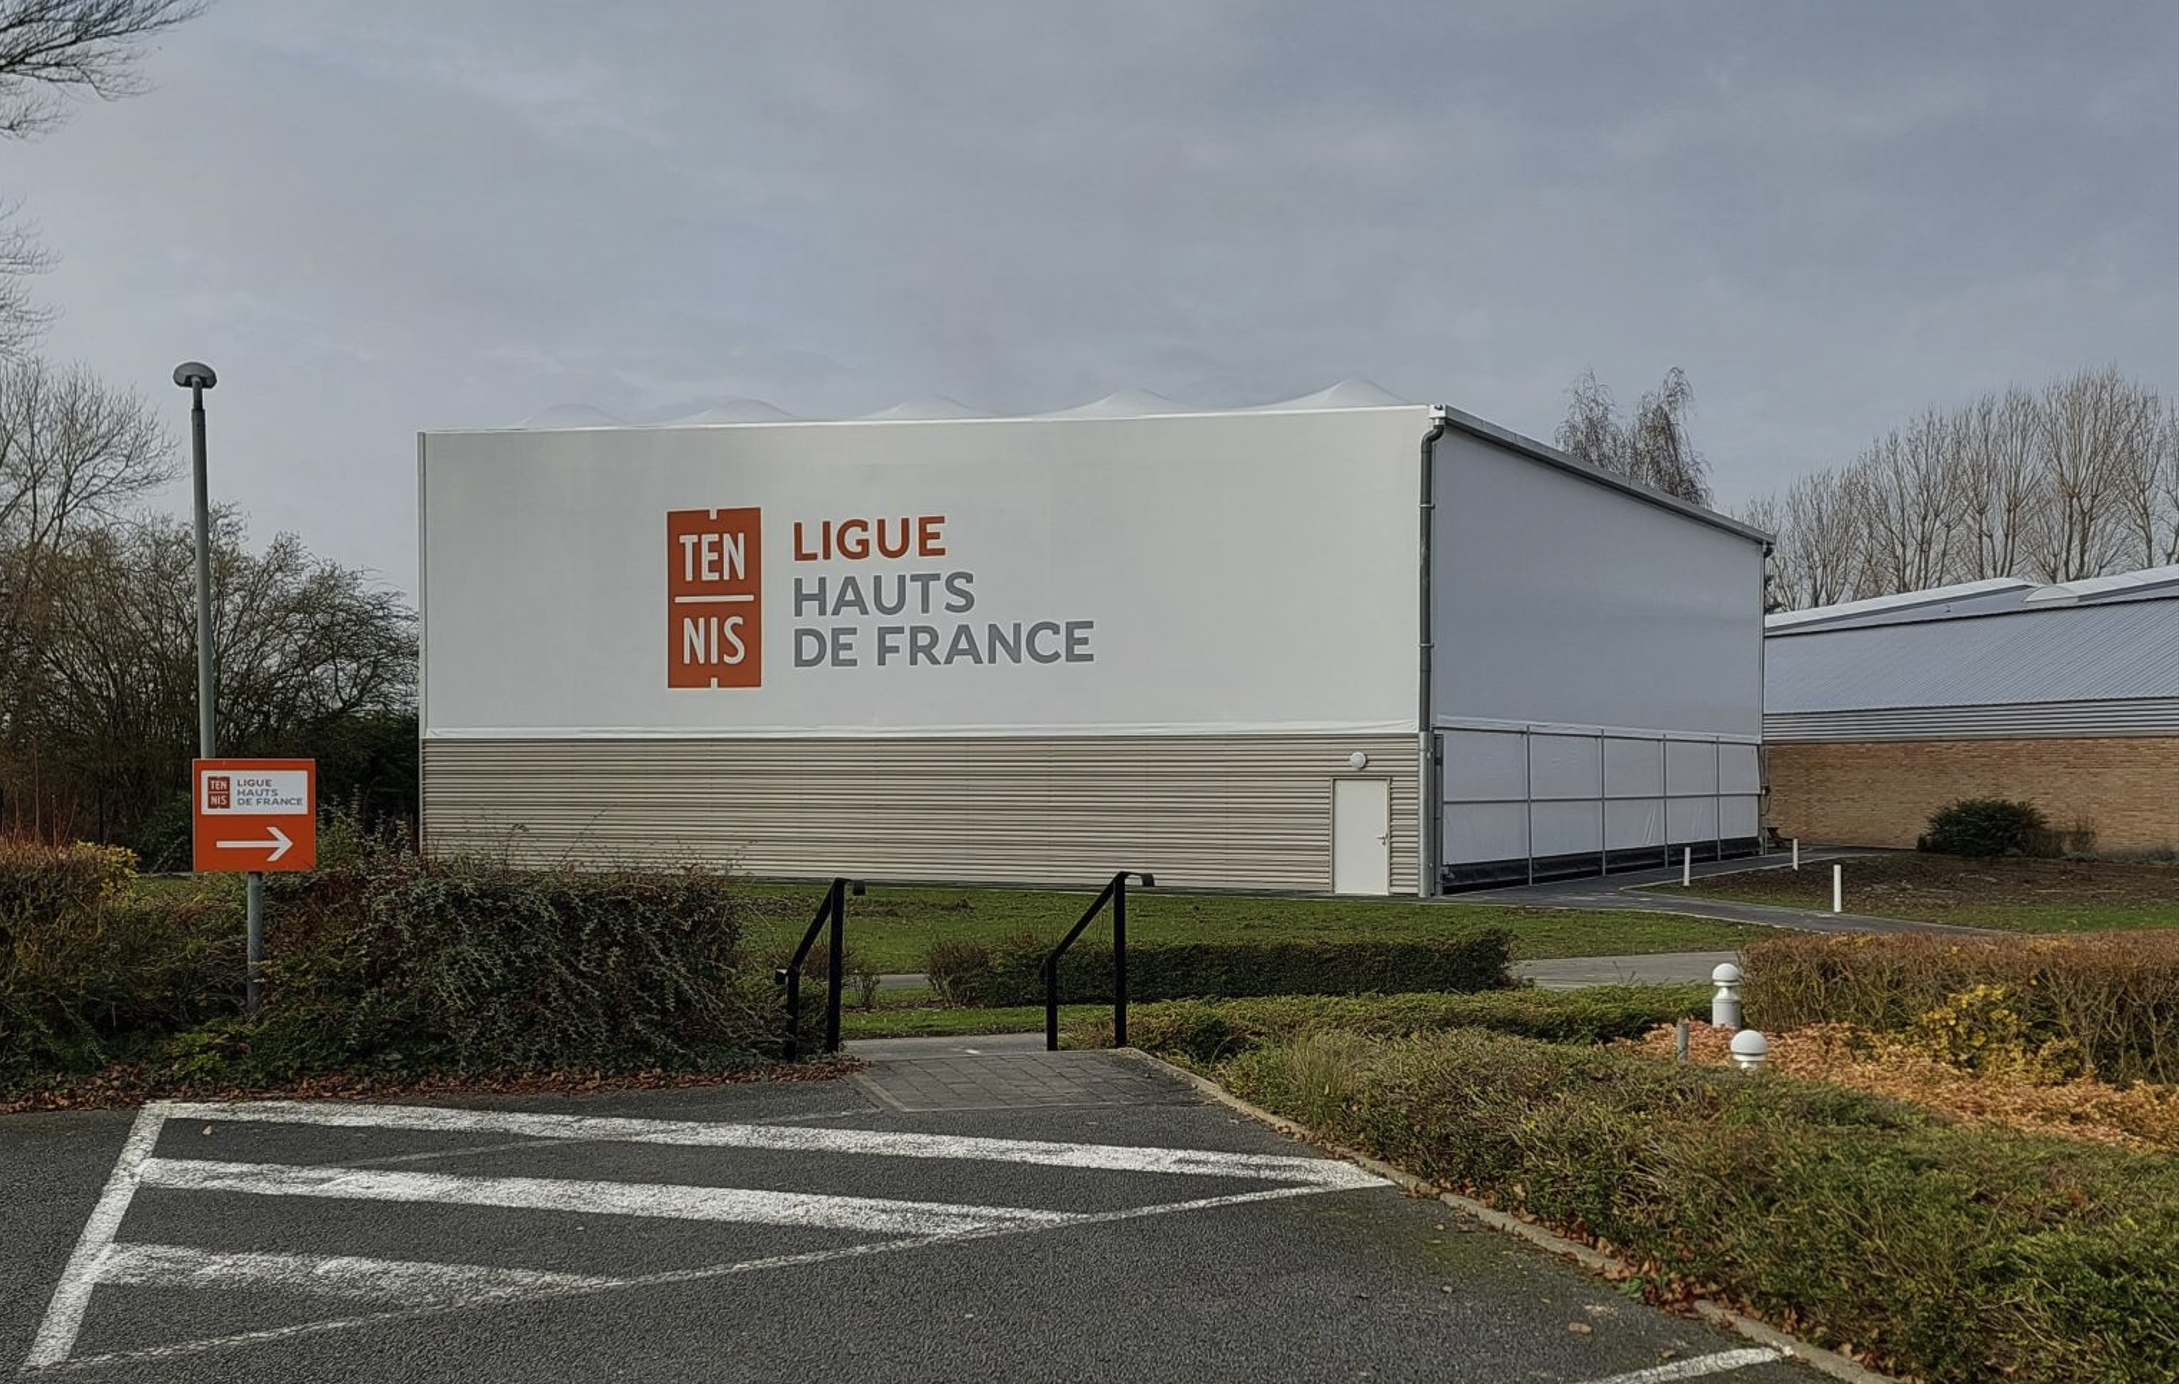 La Liga Hauts-de-France tiene 2 padel indoor